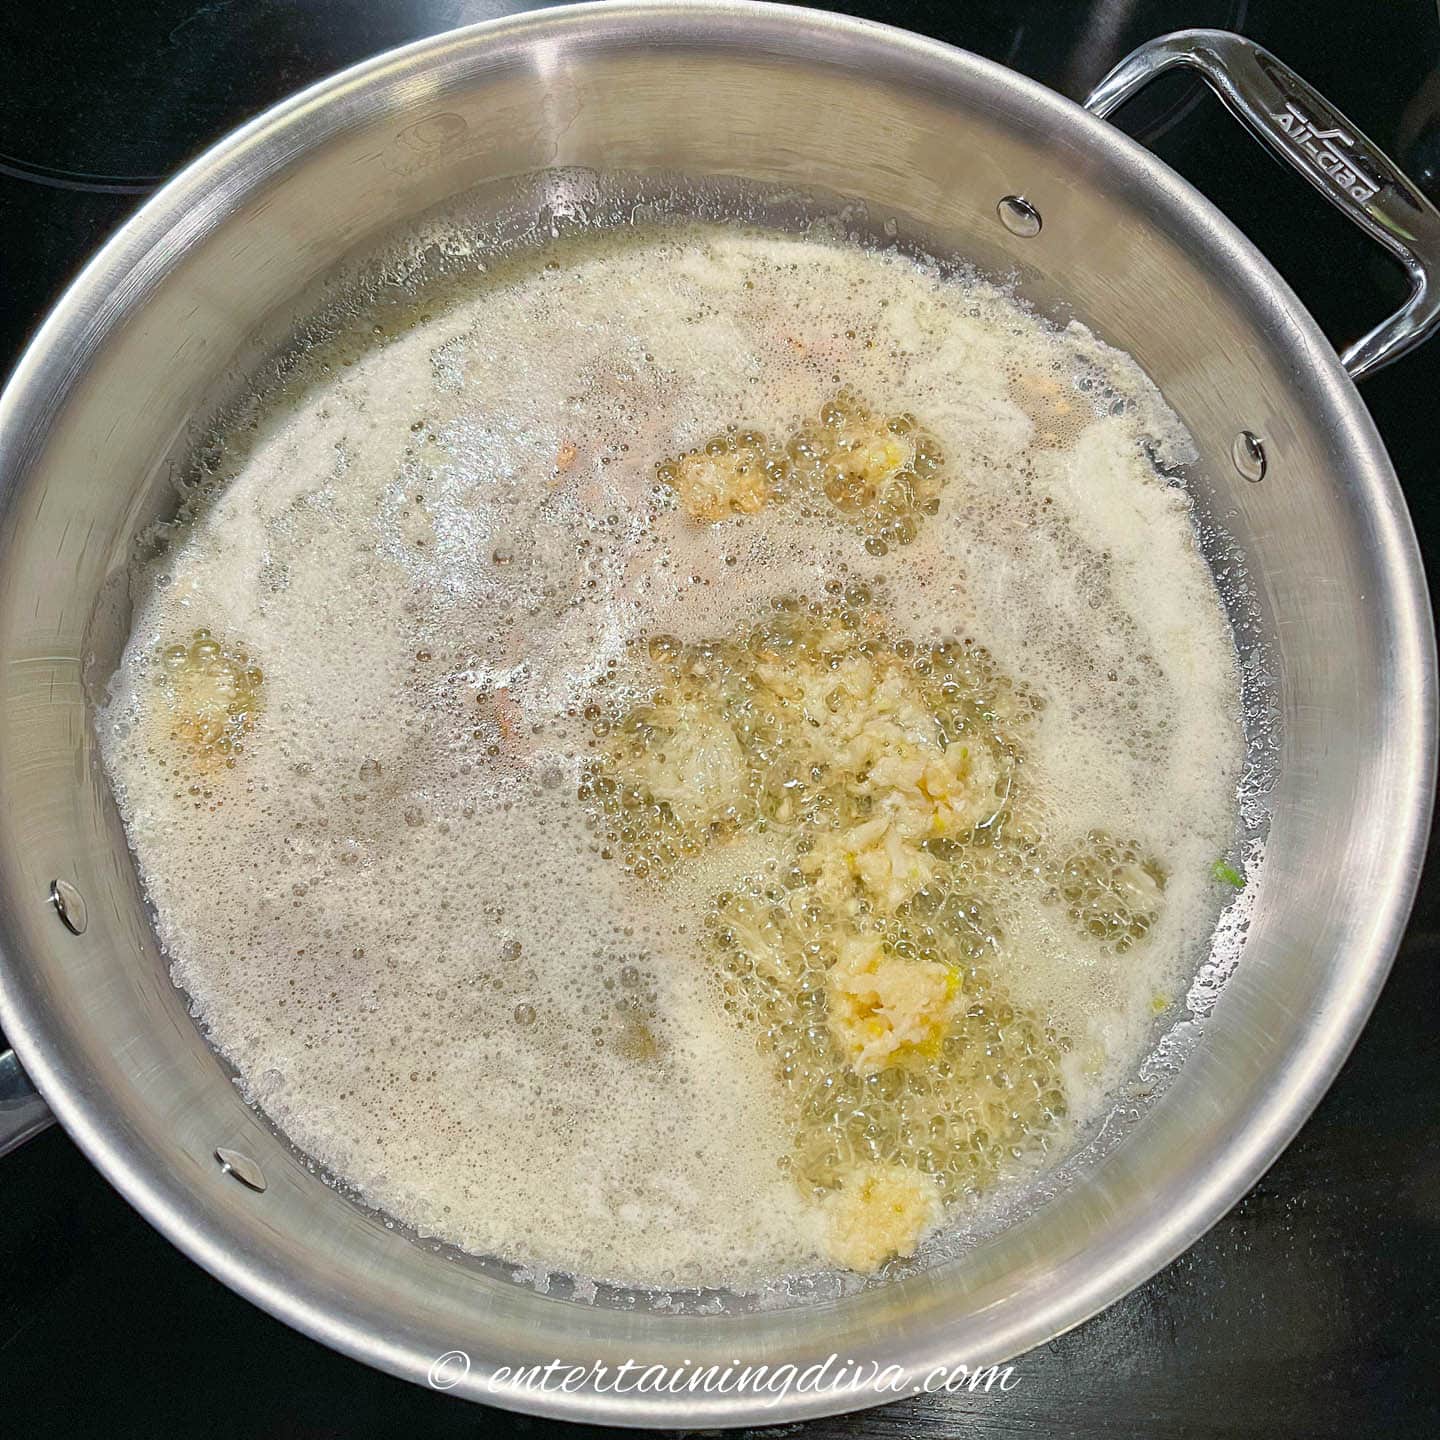 Garlic cooking in butter in a saucepan